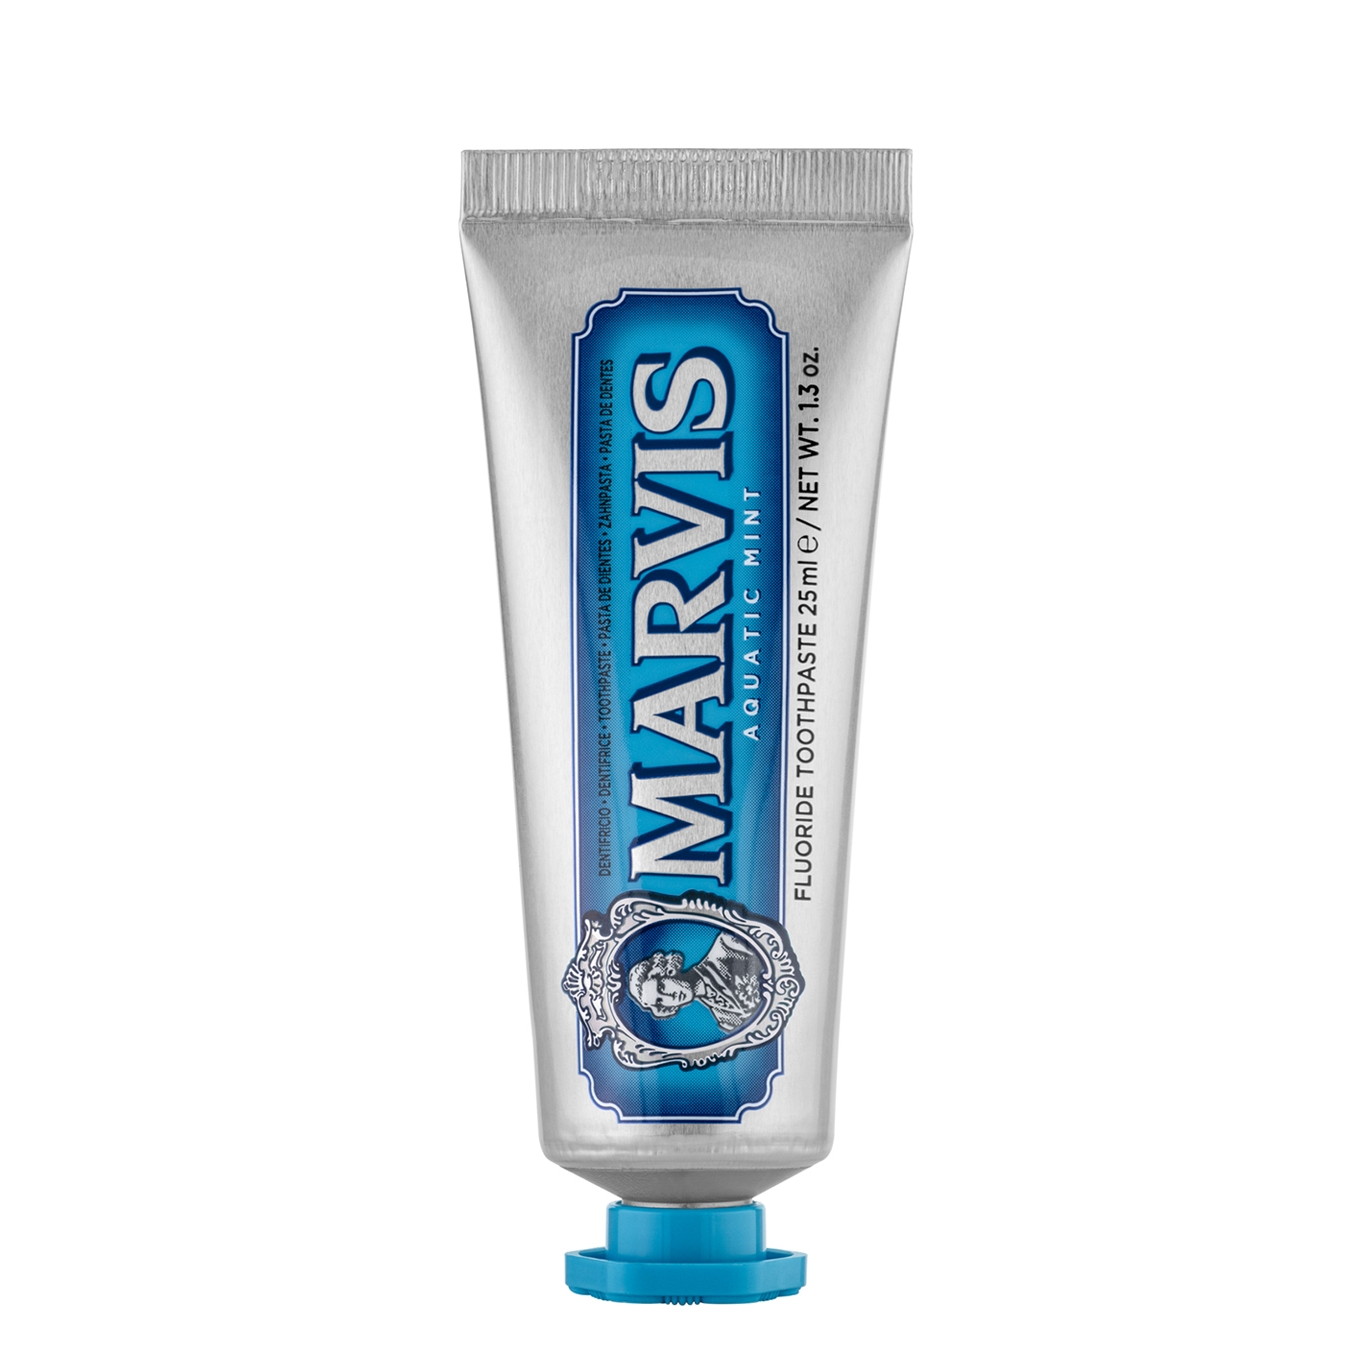 Marvis Aquatic Mint Travel Toothpaste 25ml